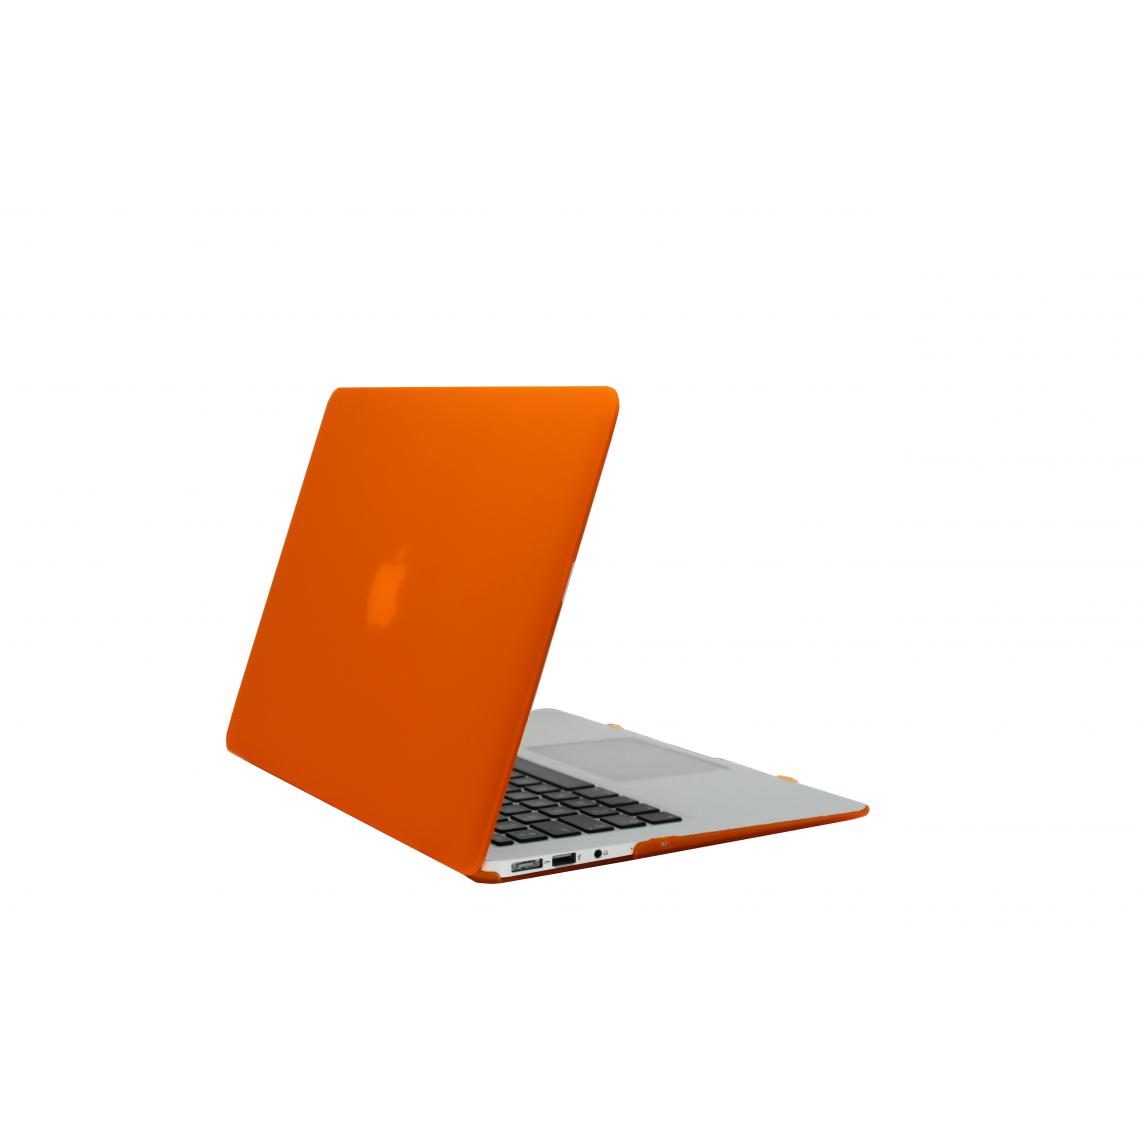 Apple - MacBook Air 13.3'' i5-5250U 4Go 128Go SSD - 2015 Coque Orange - MacBook